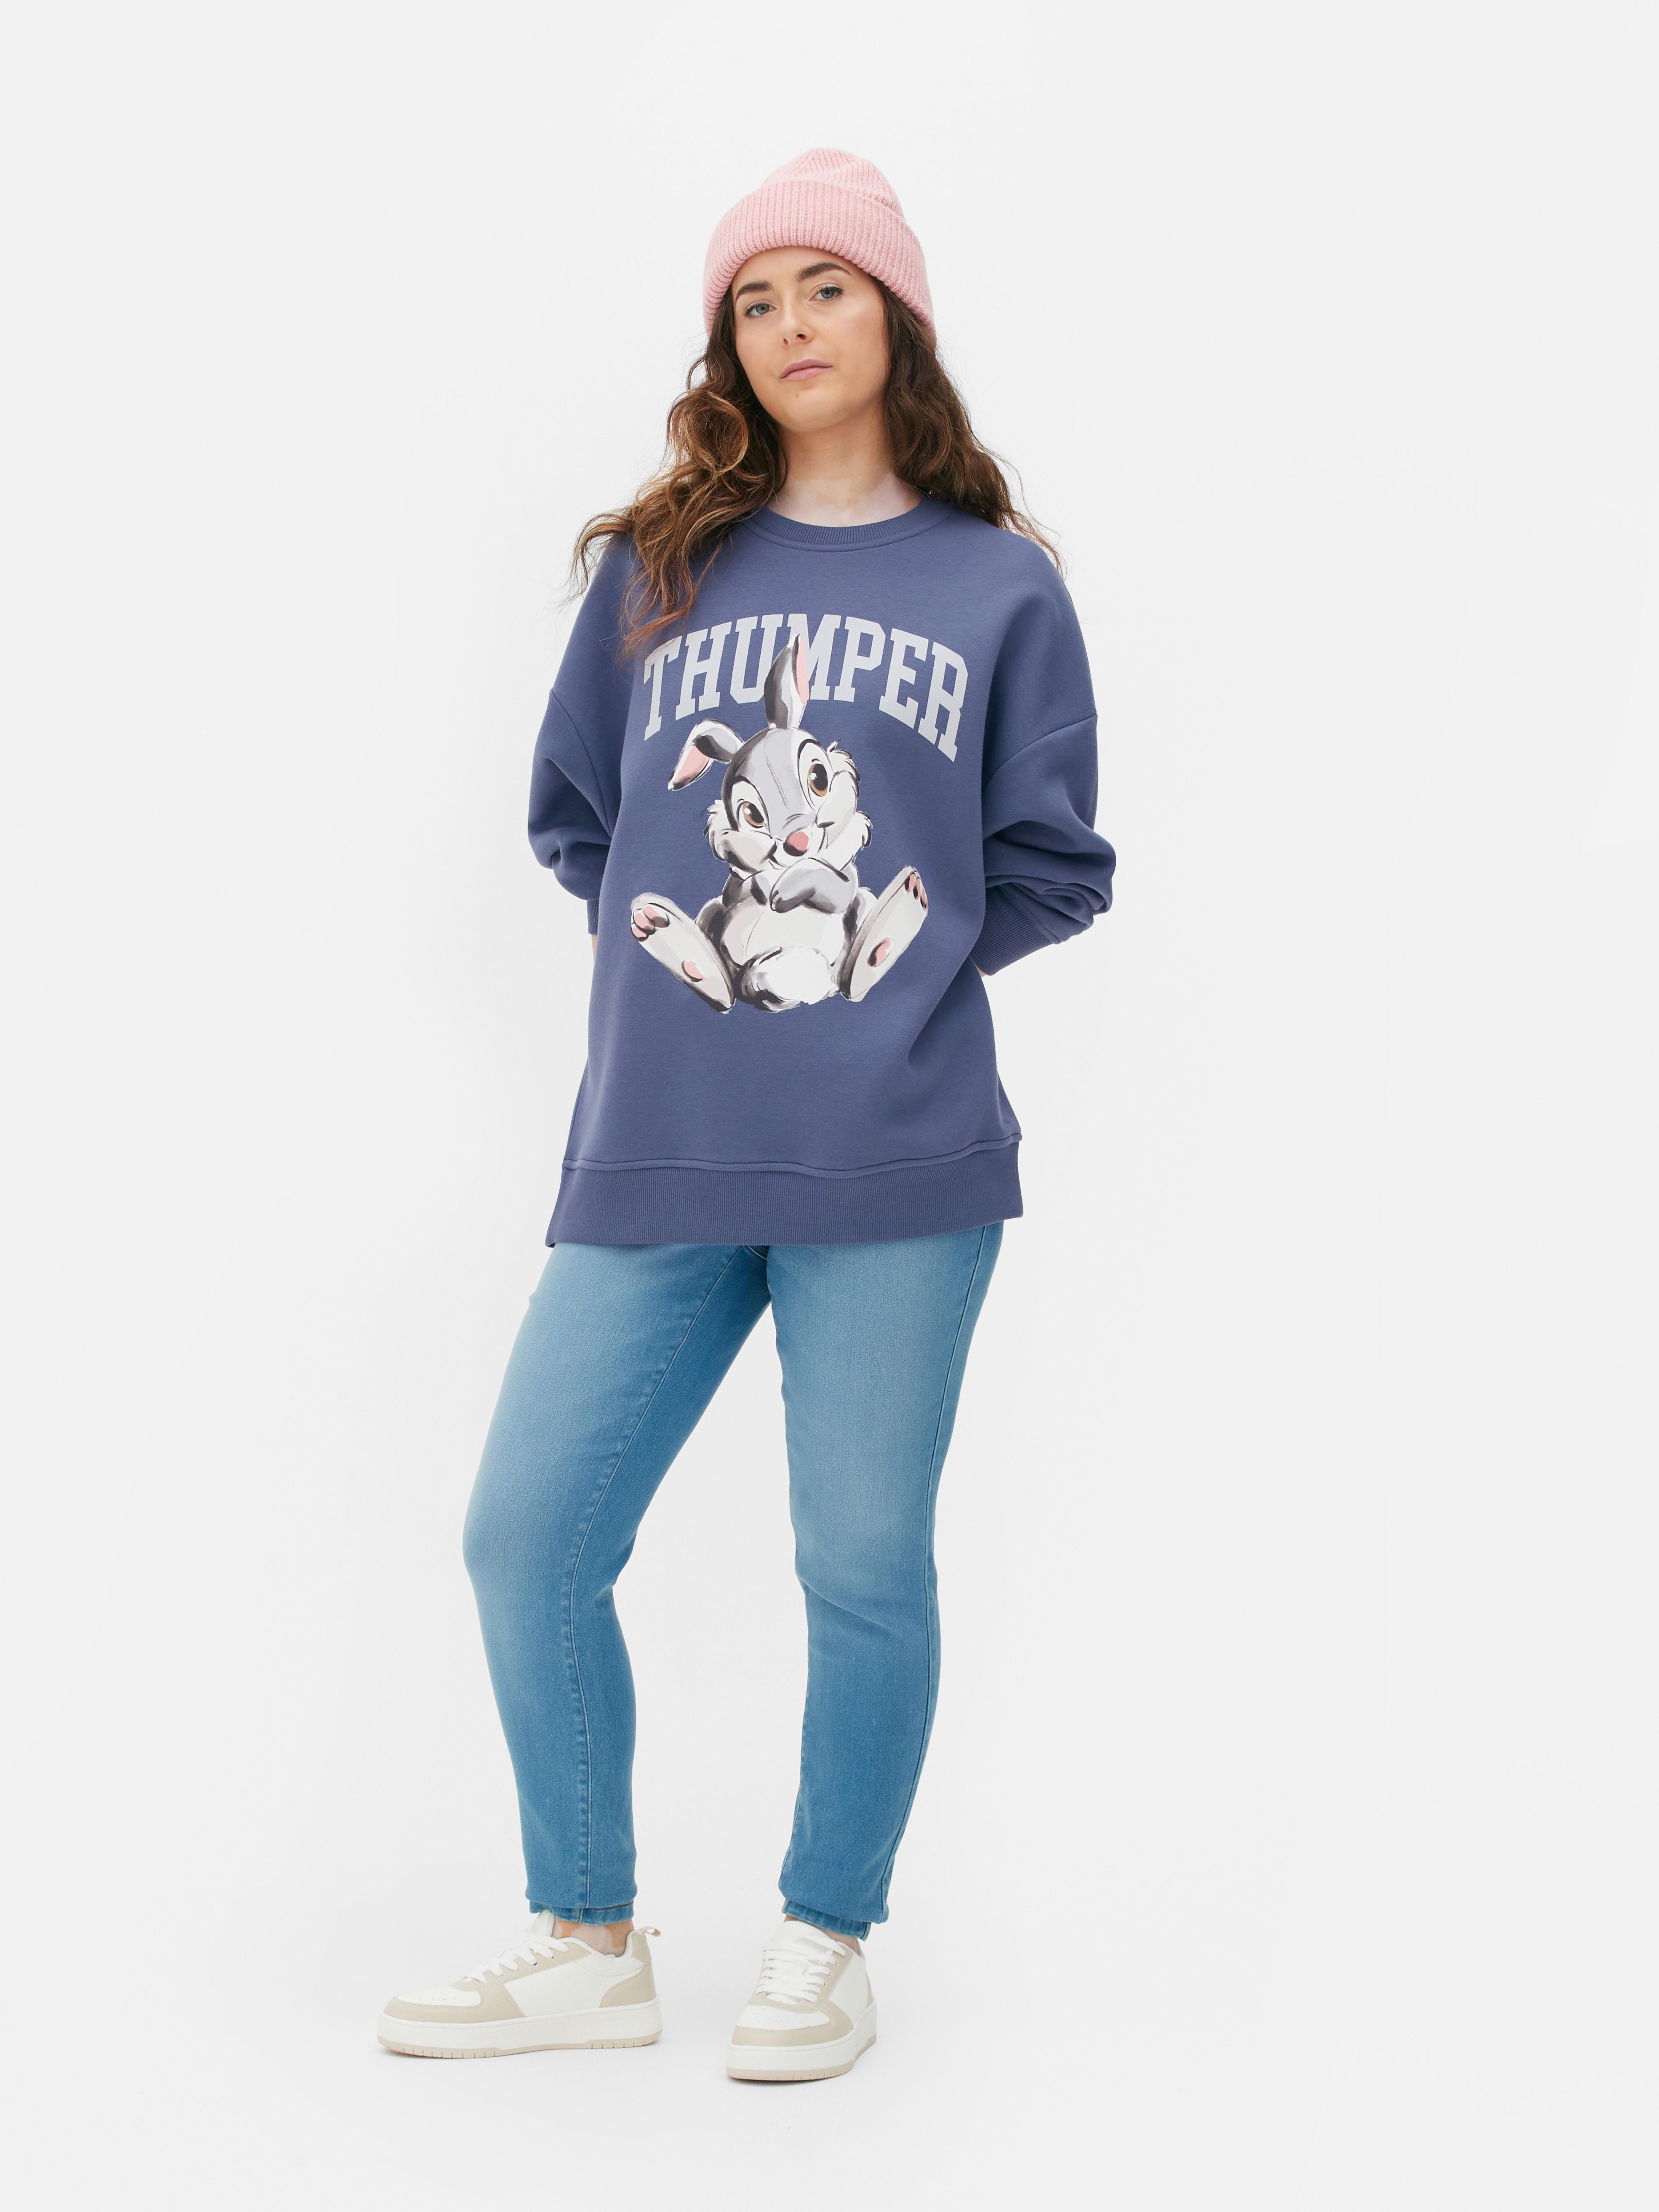 Disney’s Bambi Thumper Oversized Sweatshirt